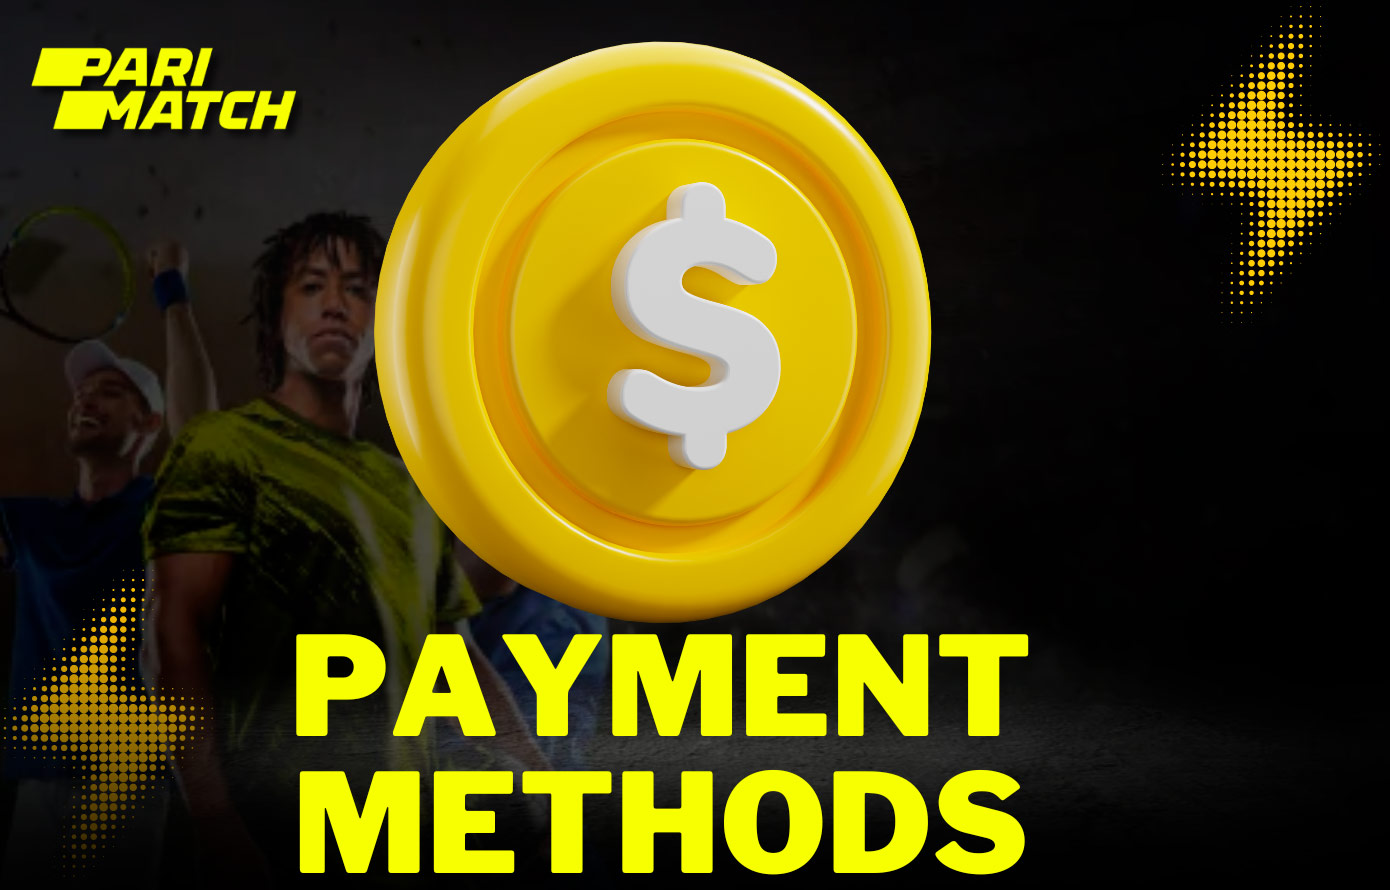 Parimatch payment methods in Tanzania